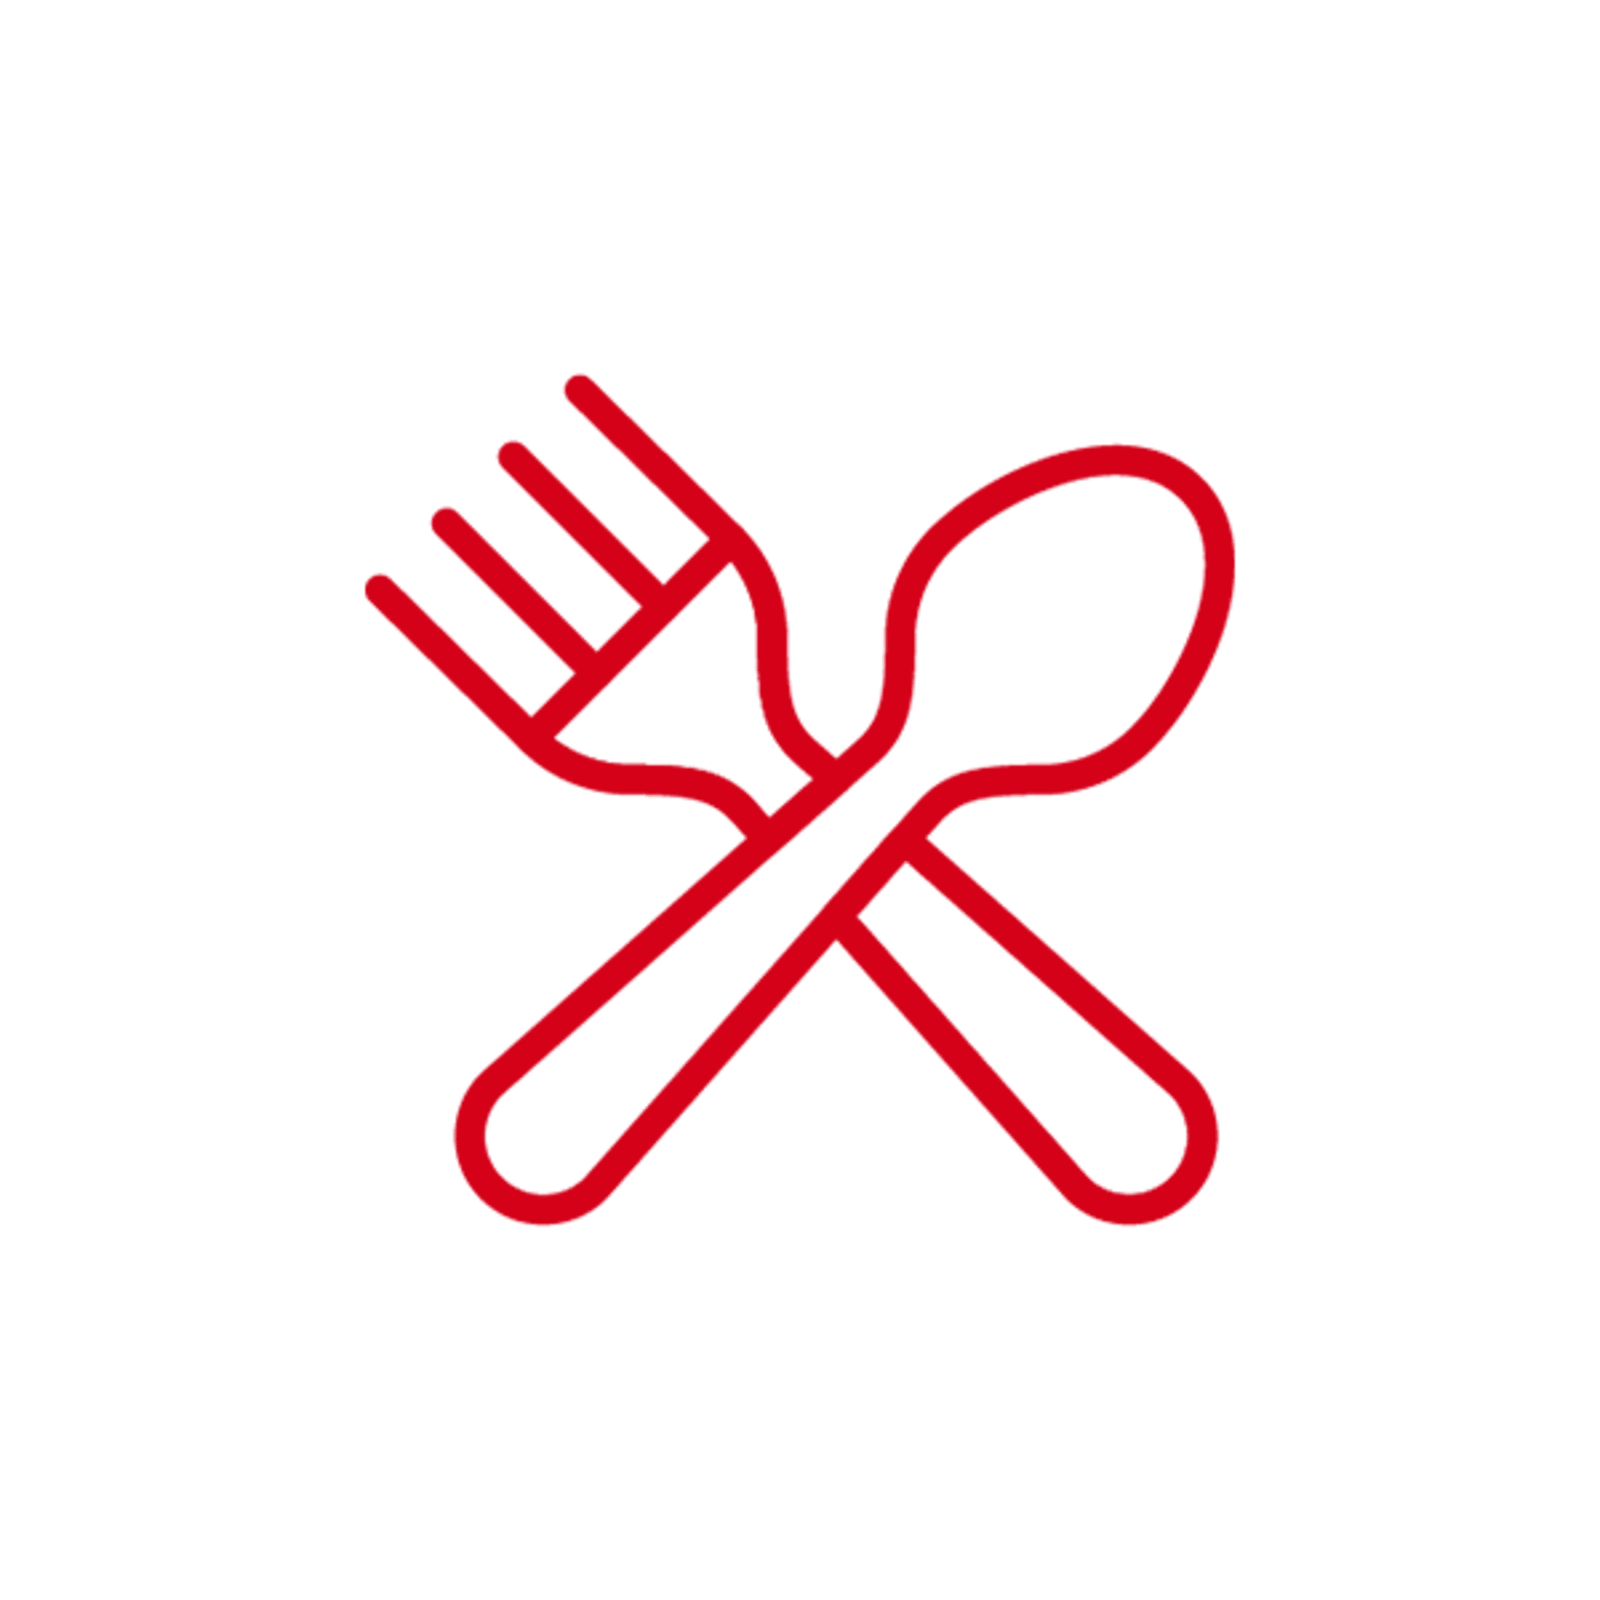 Red utensils icon